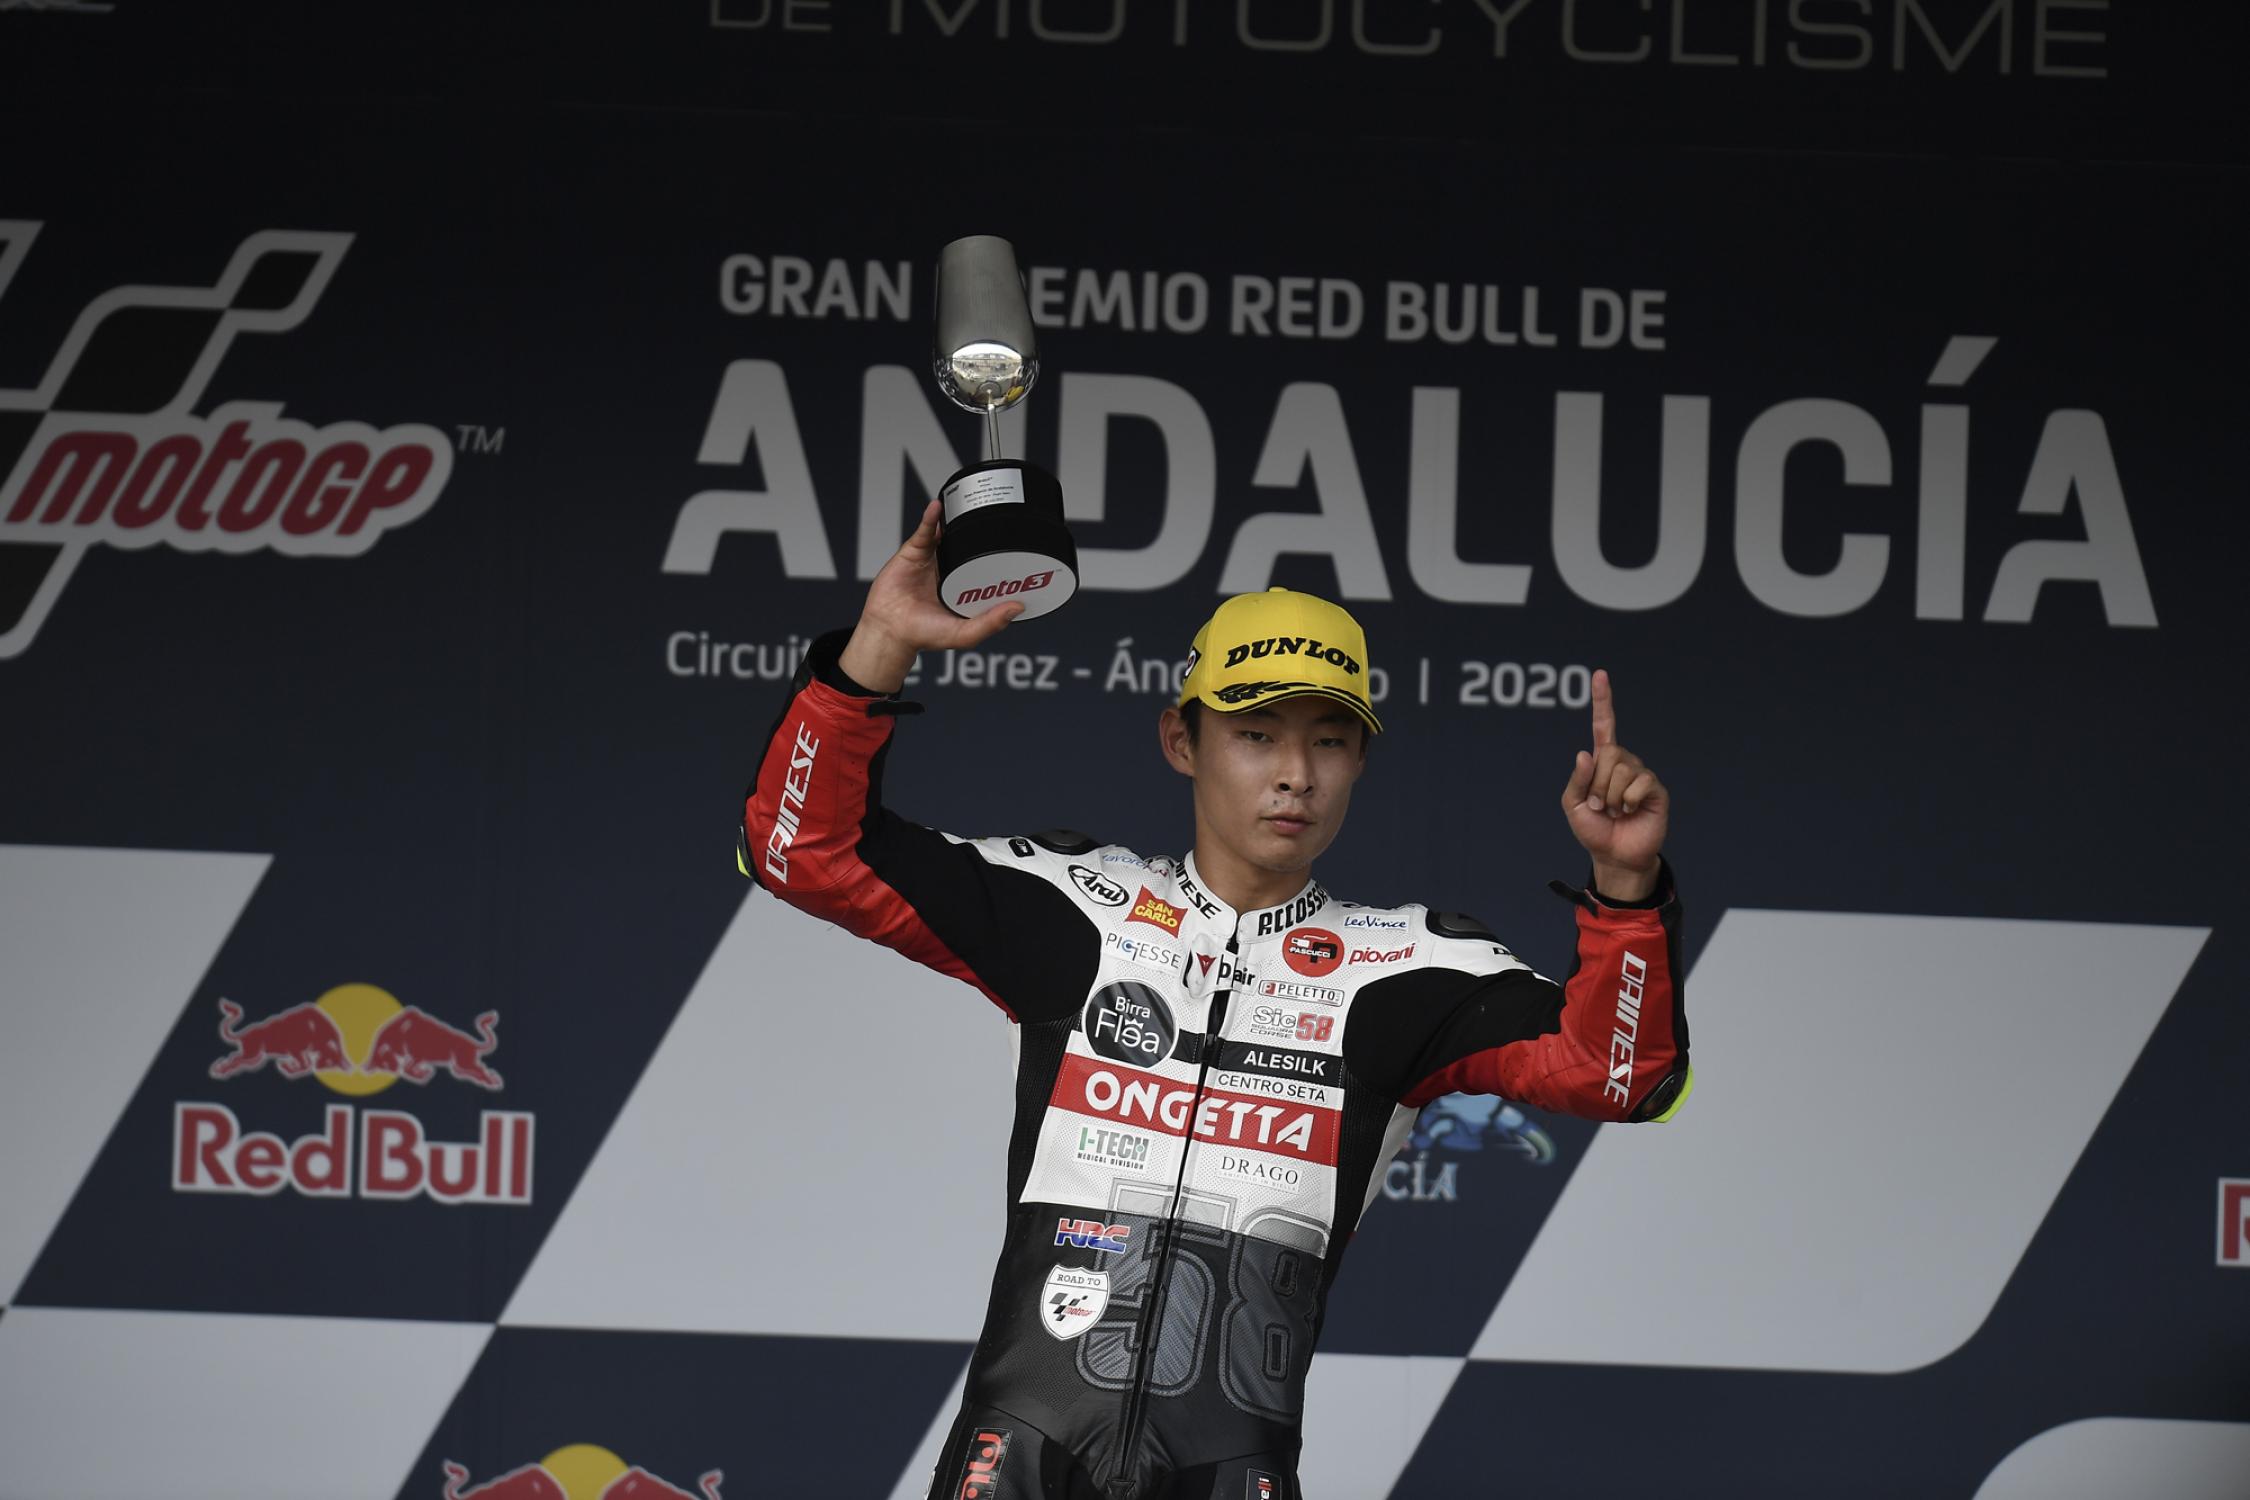 Featured image for “AndaluciaGP: Tatsuki Suzuki bags second-ever race win as Arenas crashes”